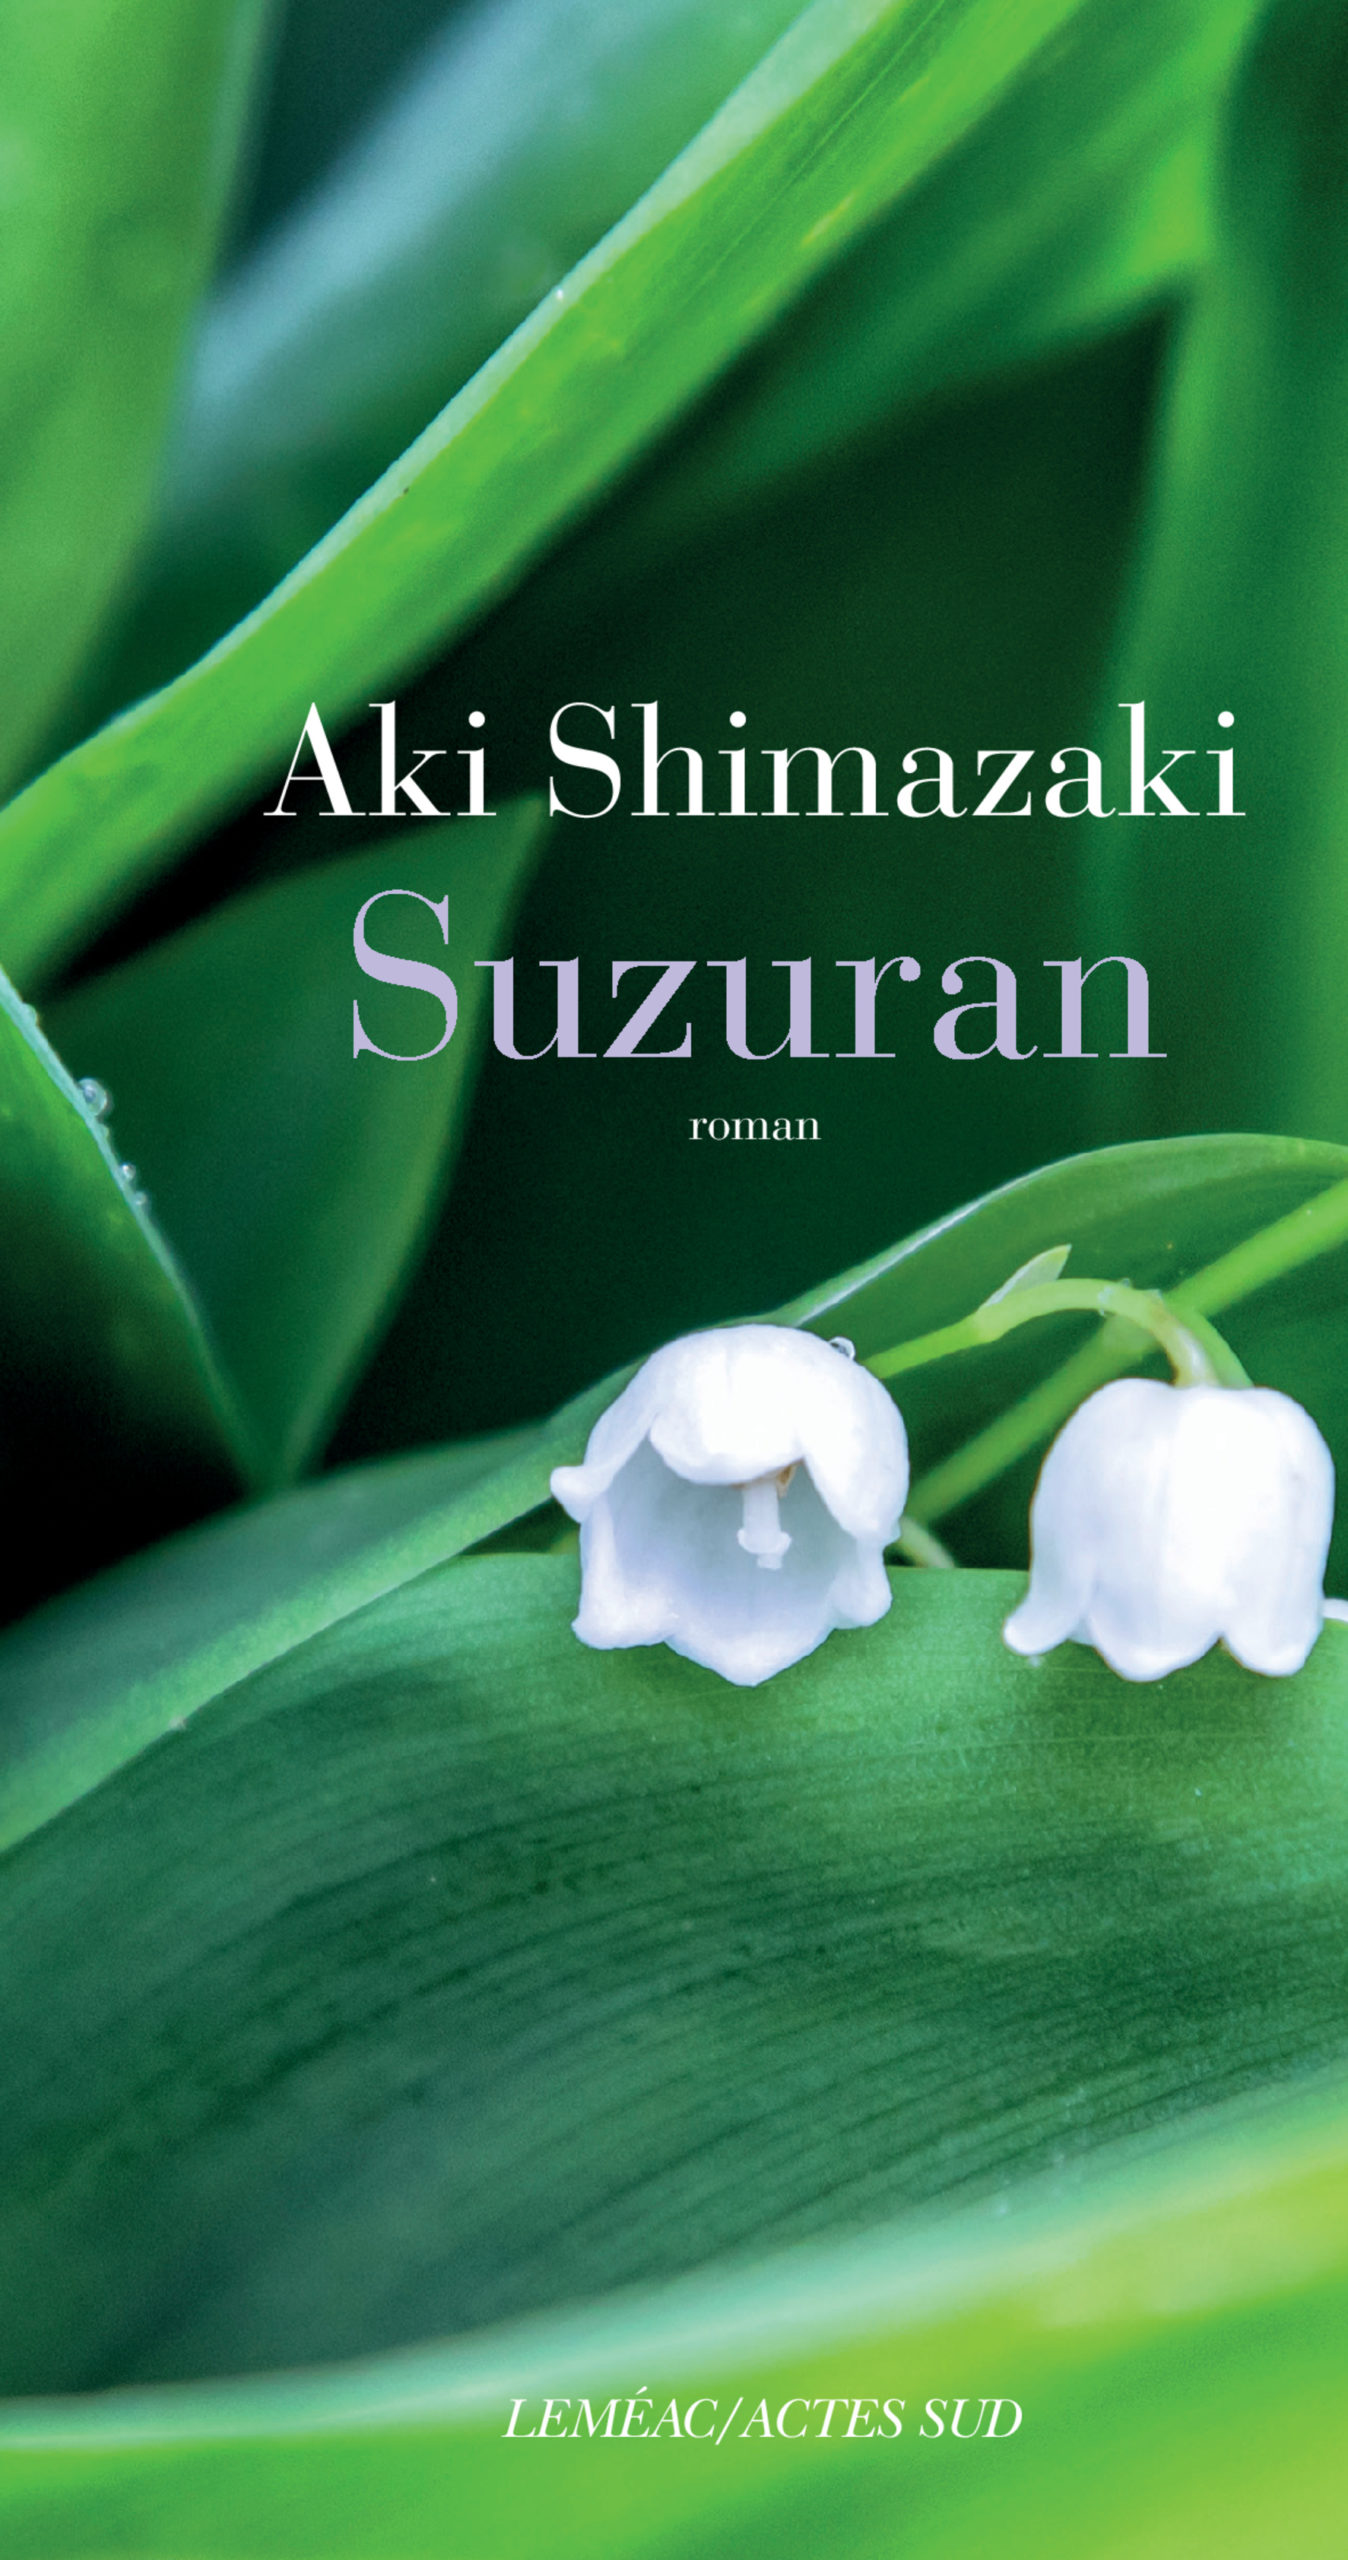 Suzuran d’Aki Shimazaki paraît chez Actes Sud.